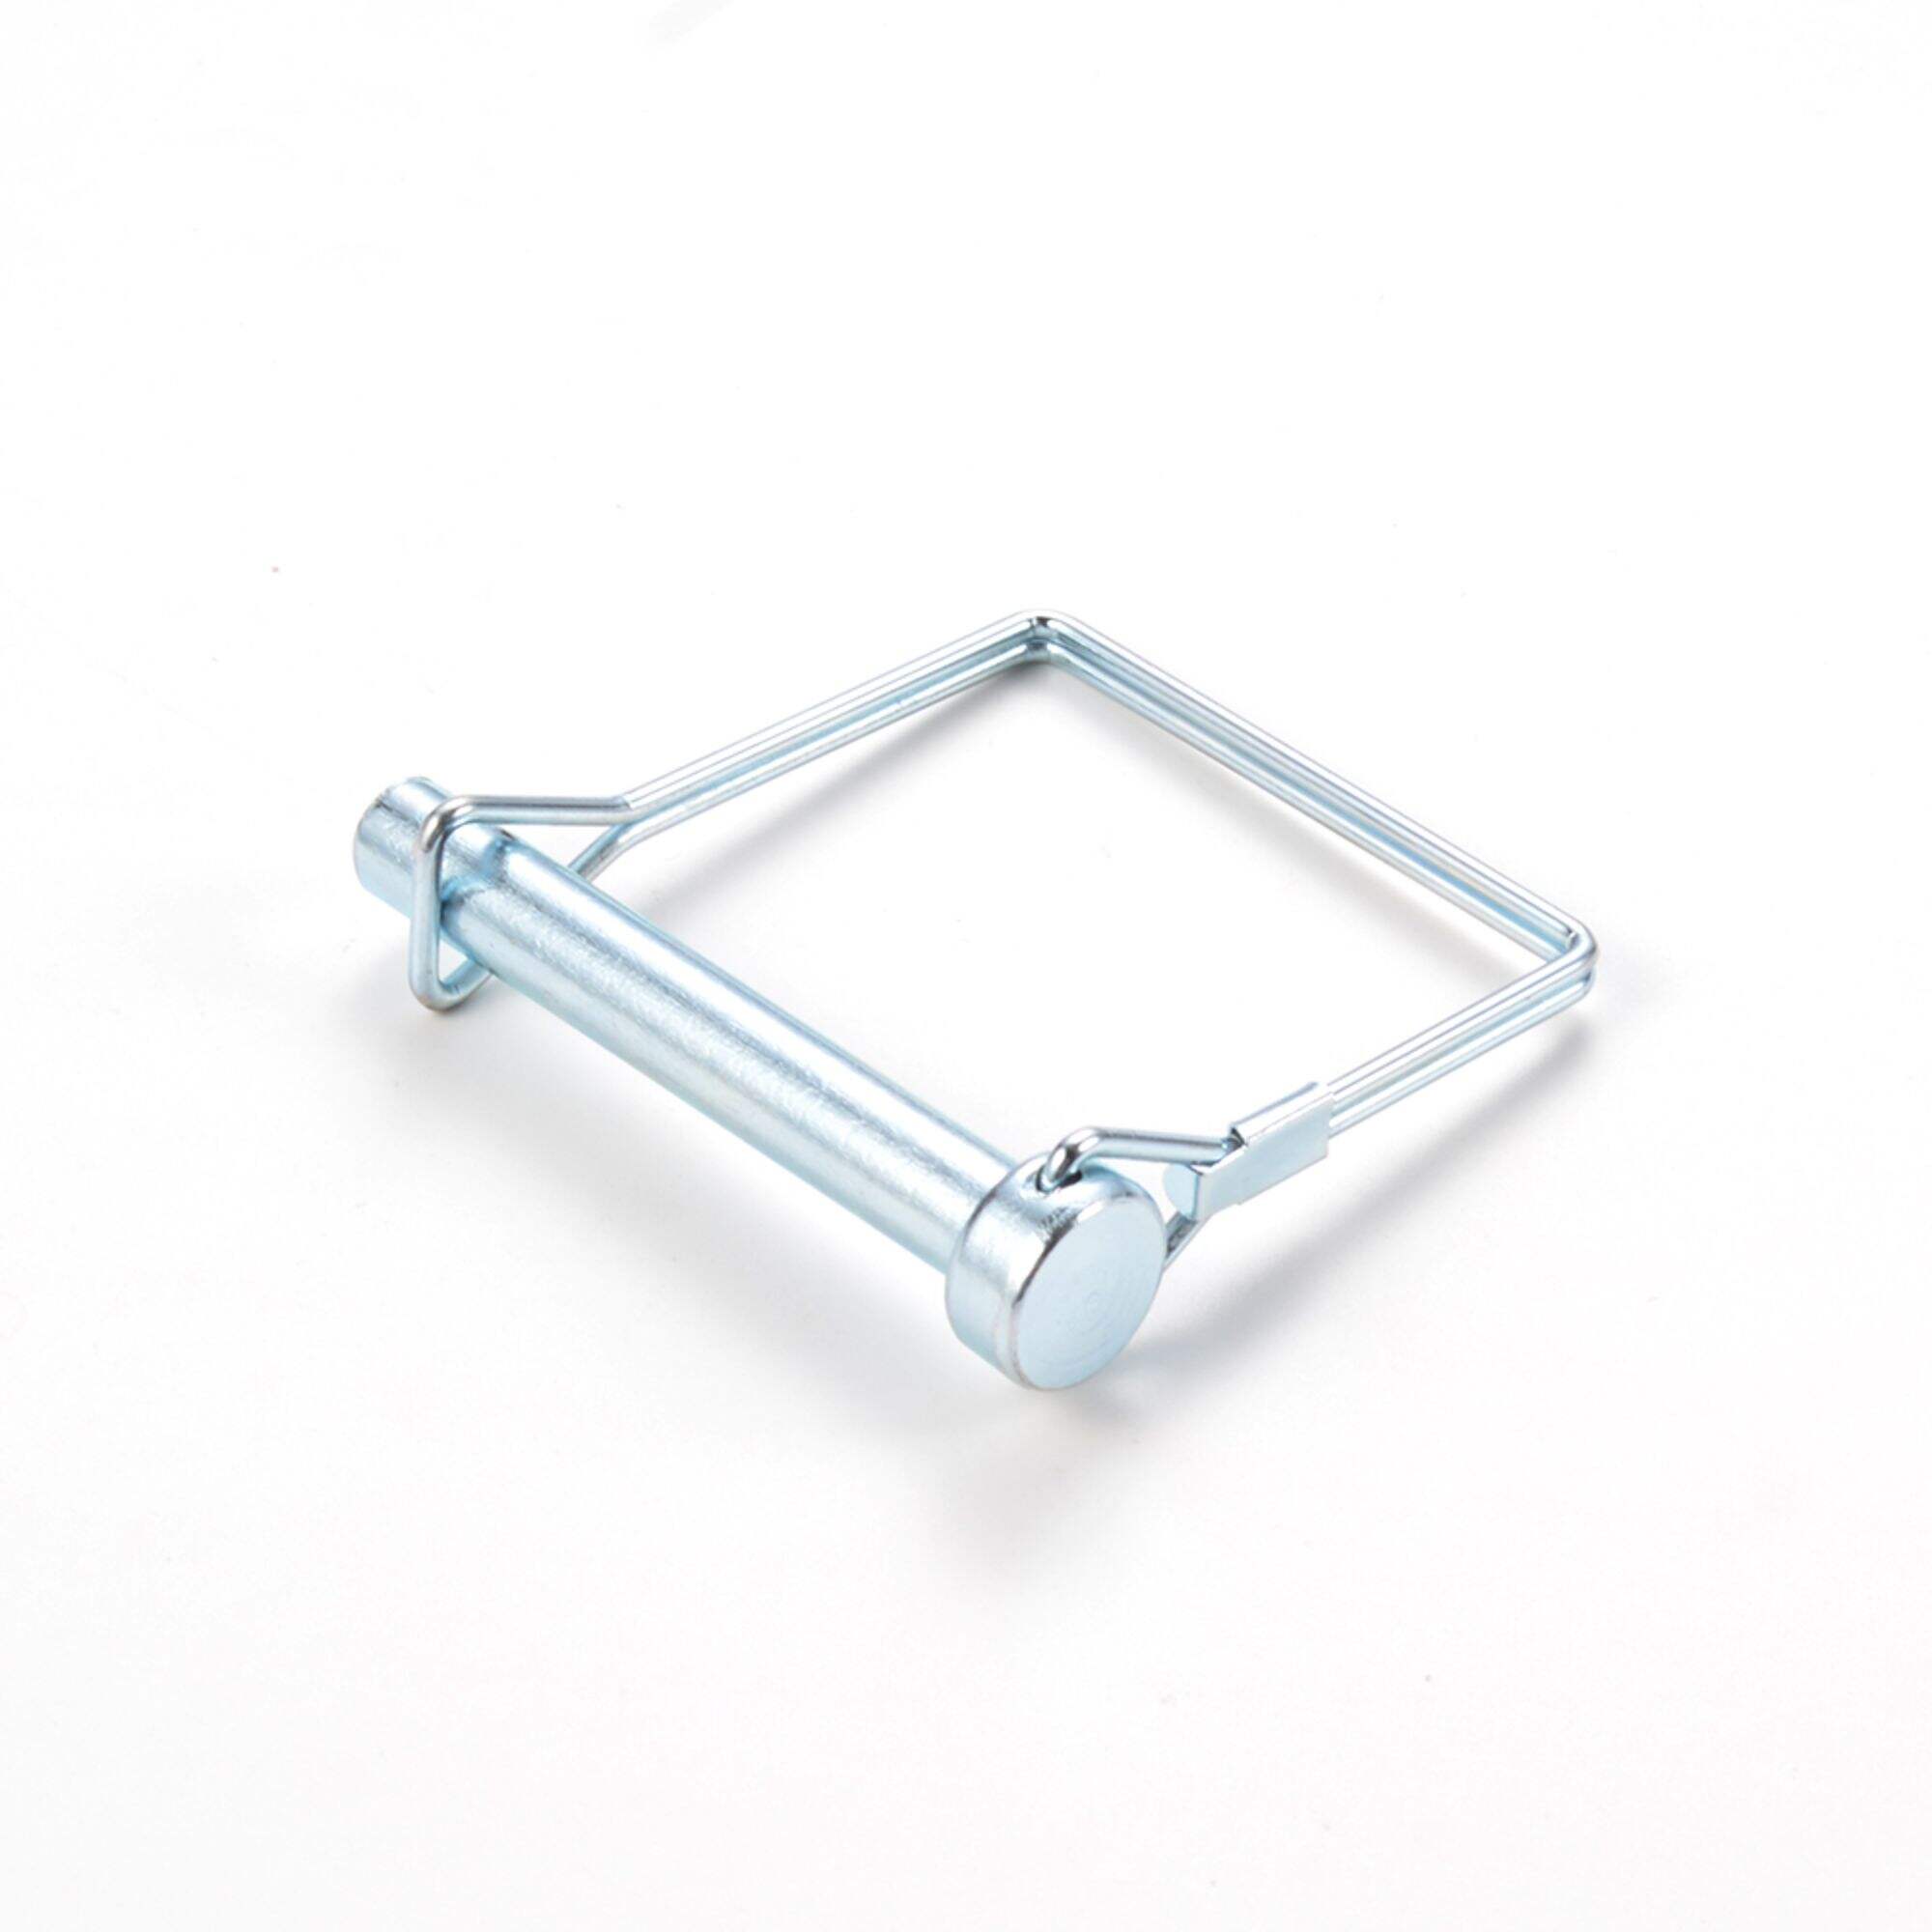 Zinc-Plated Spring Steel Standard Snap & Locking Pin